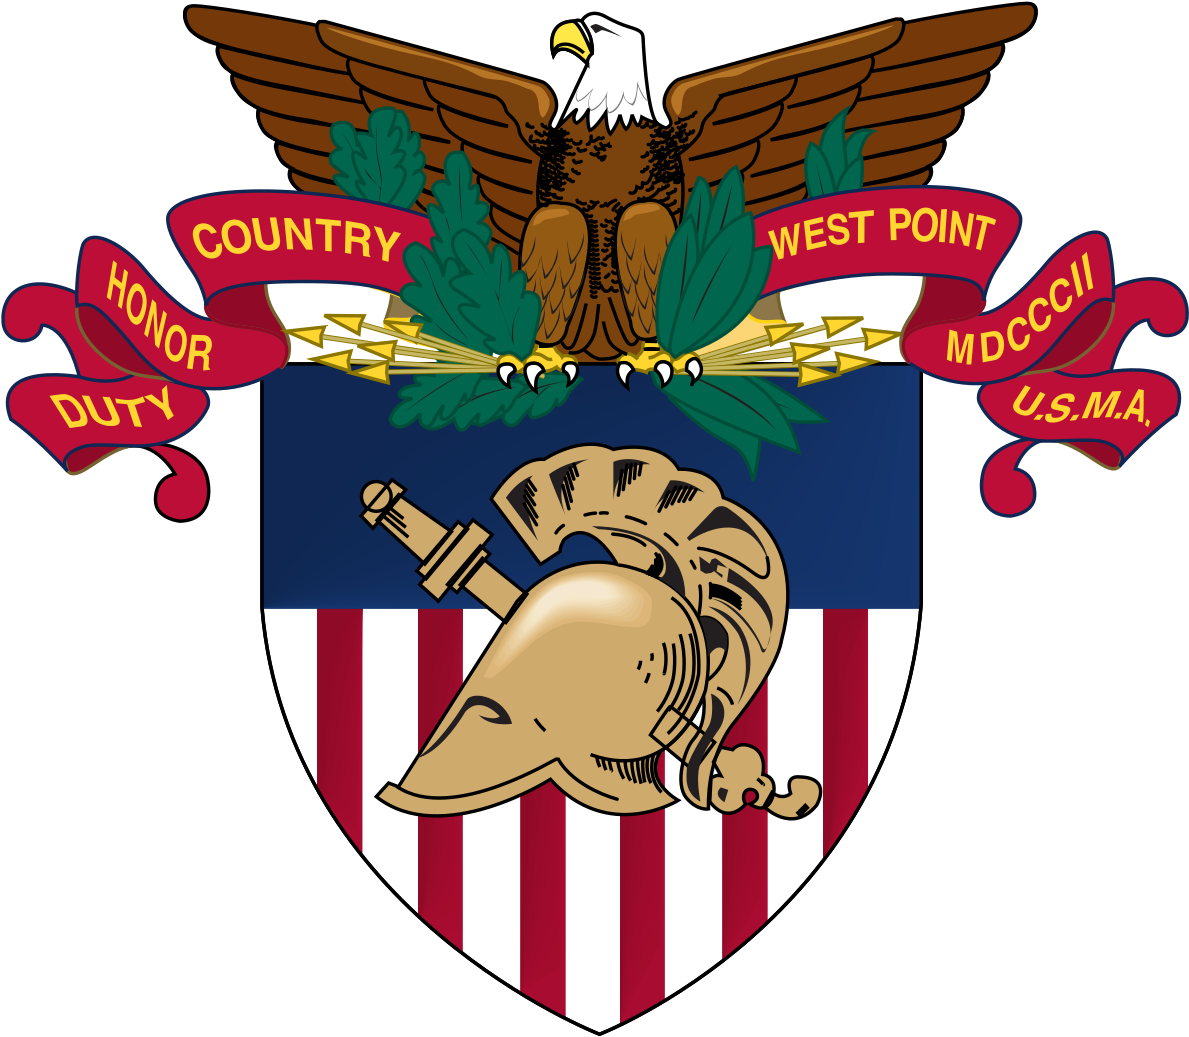 United States Military Academy Wikipedia - United States Military Academy (1200x1047), Png Download